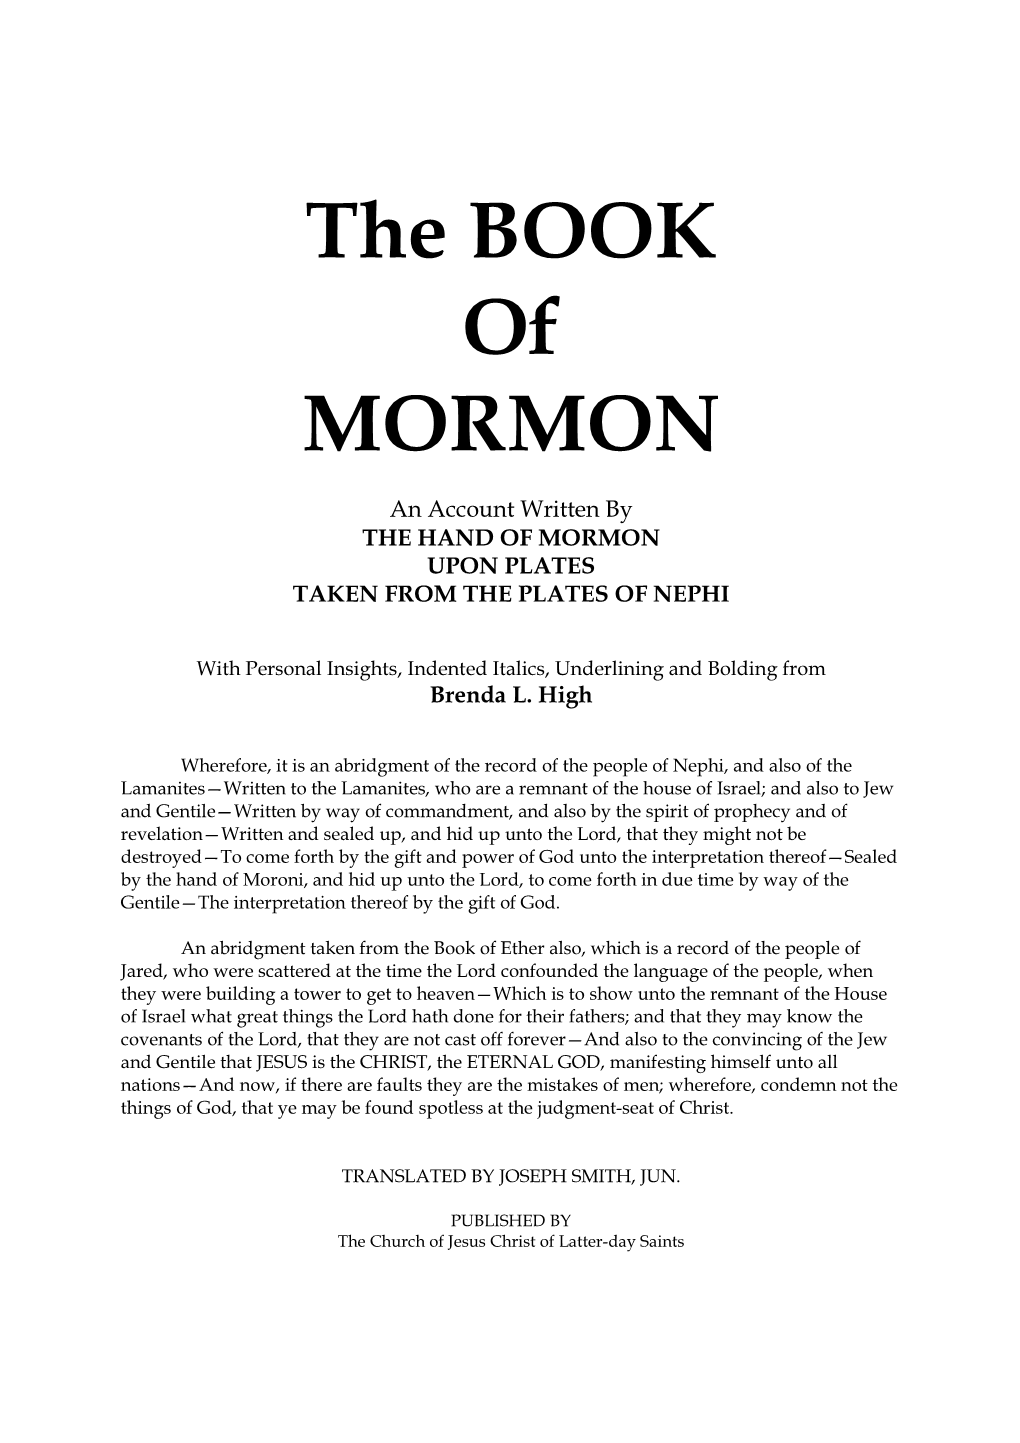 The BOOK of MORMON